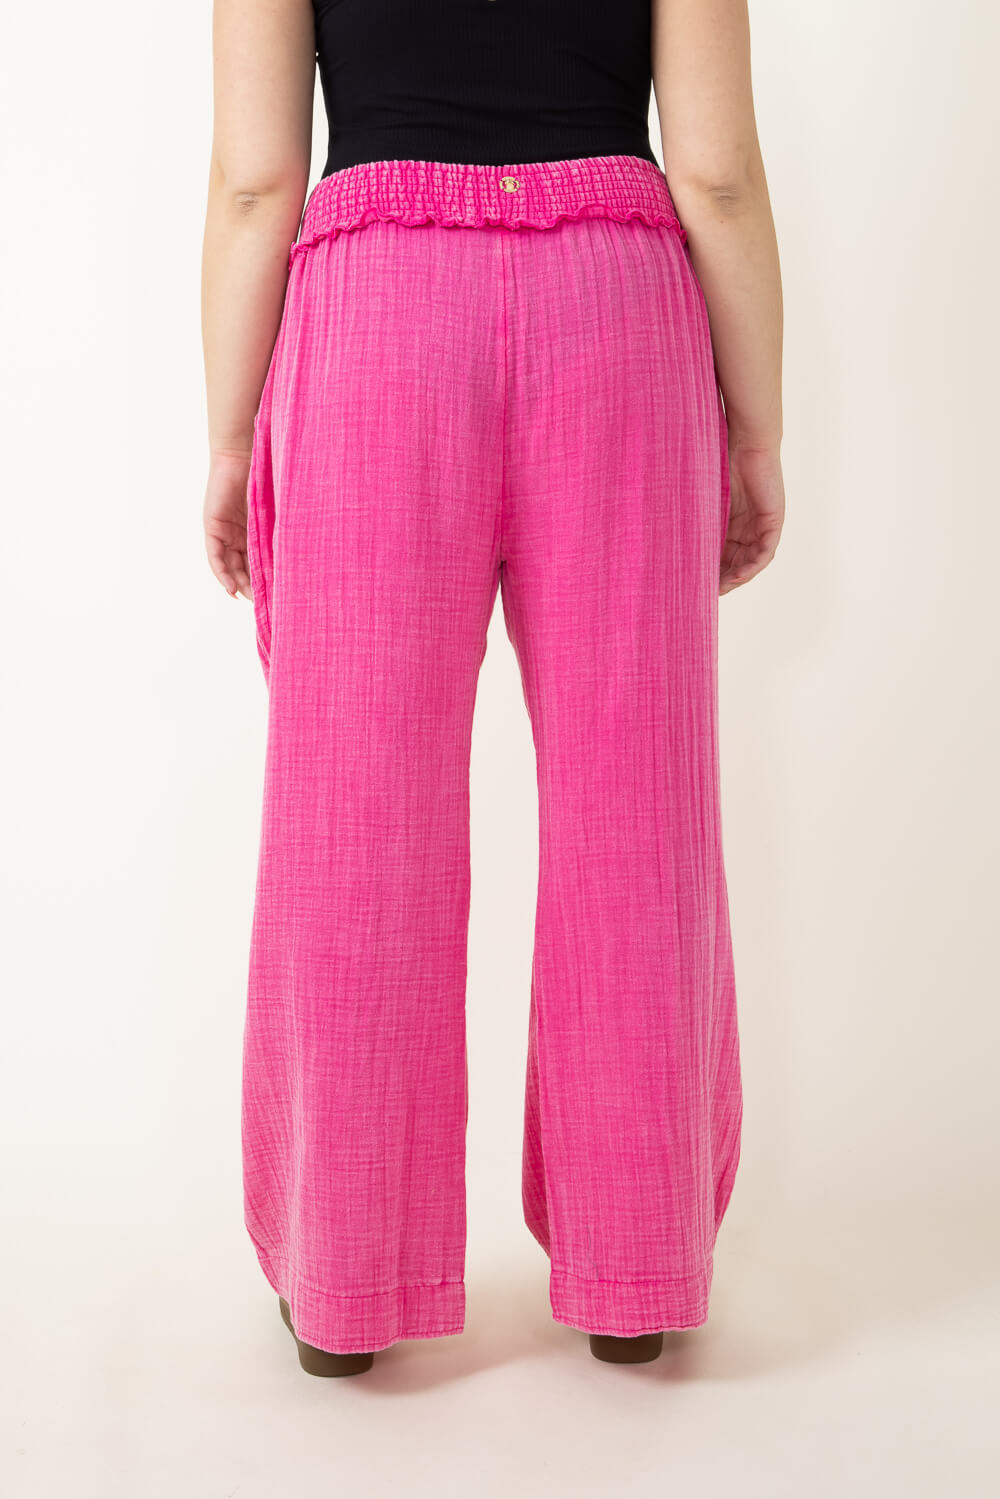 Women's 100% Cotton Gauze Beach & Pajama Pants with Pockets